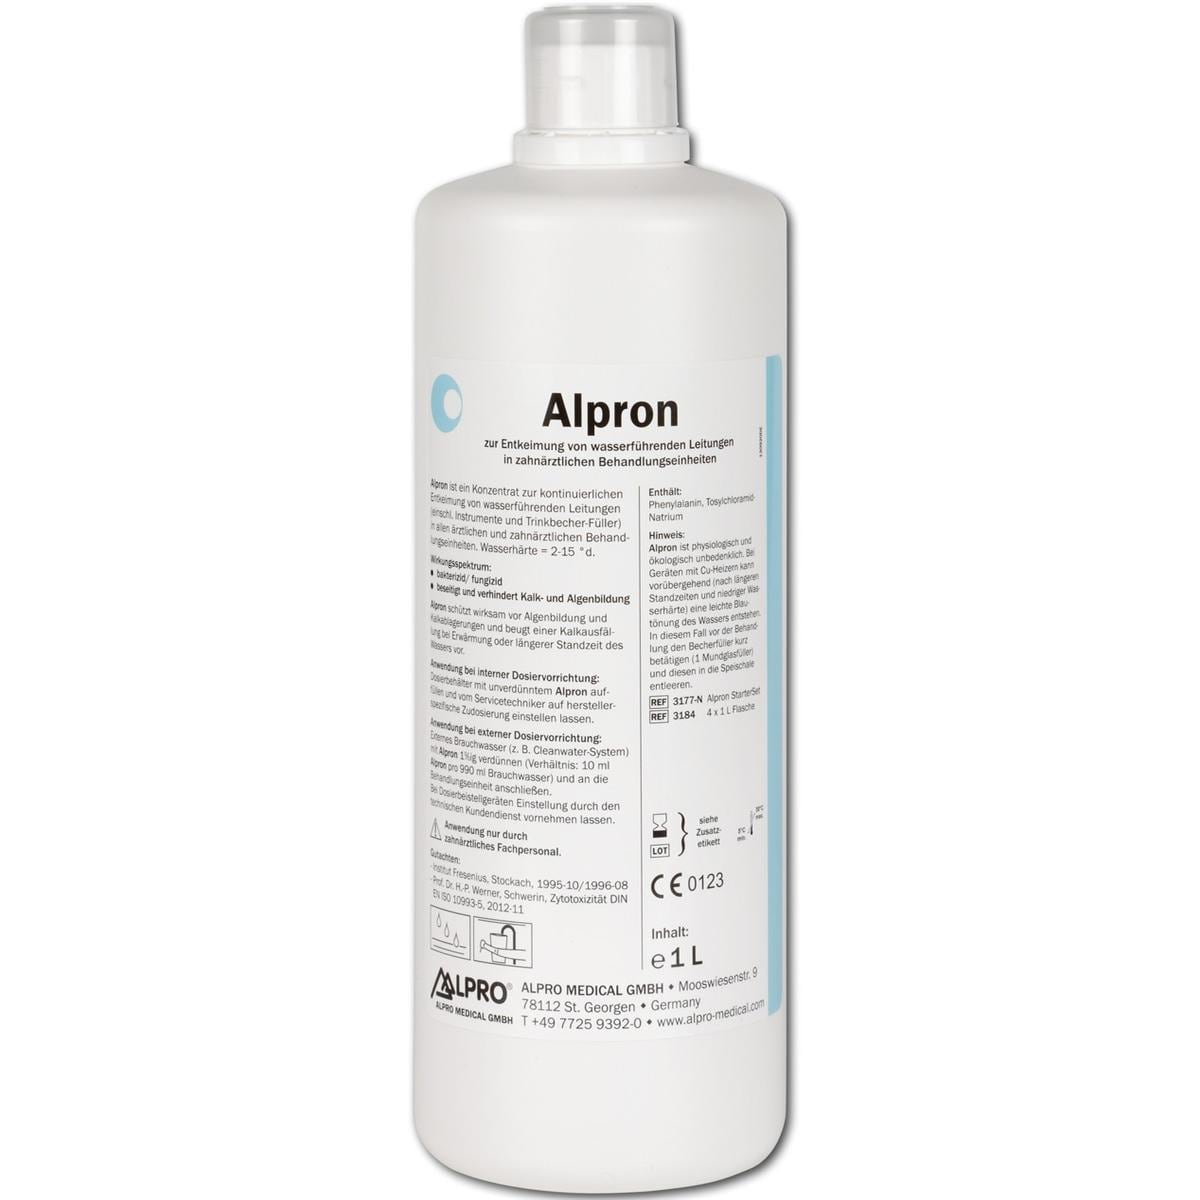 Alpron - Vloeistof, 4x 1 liter